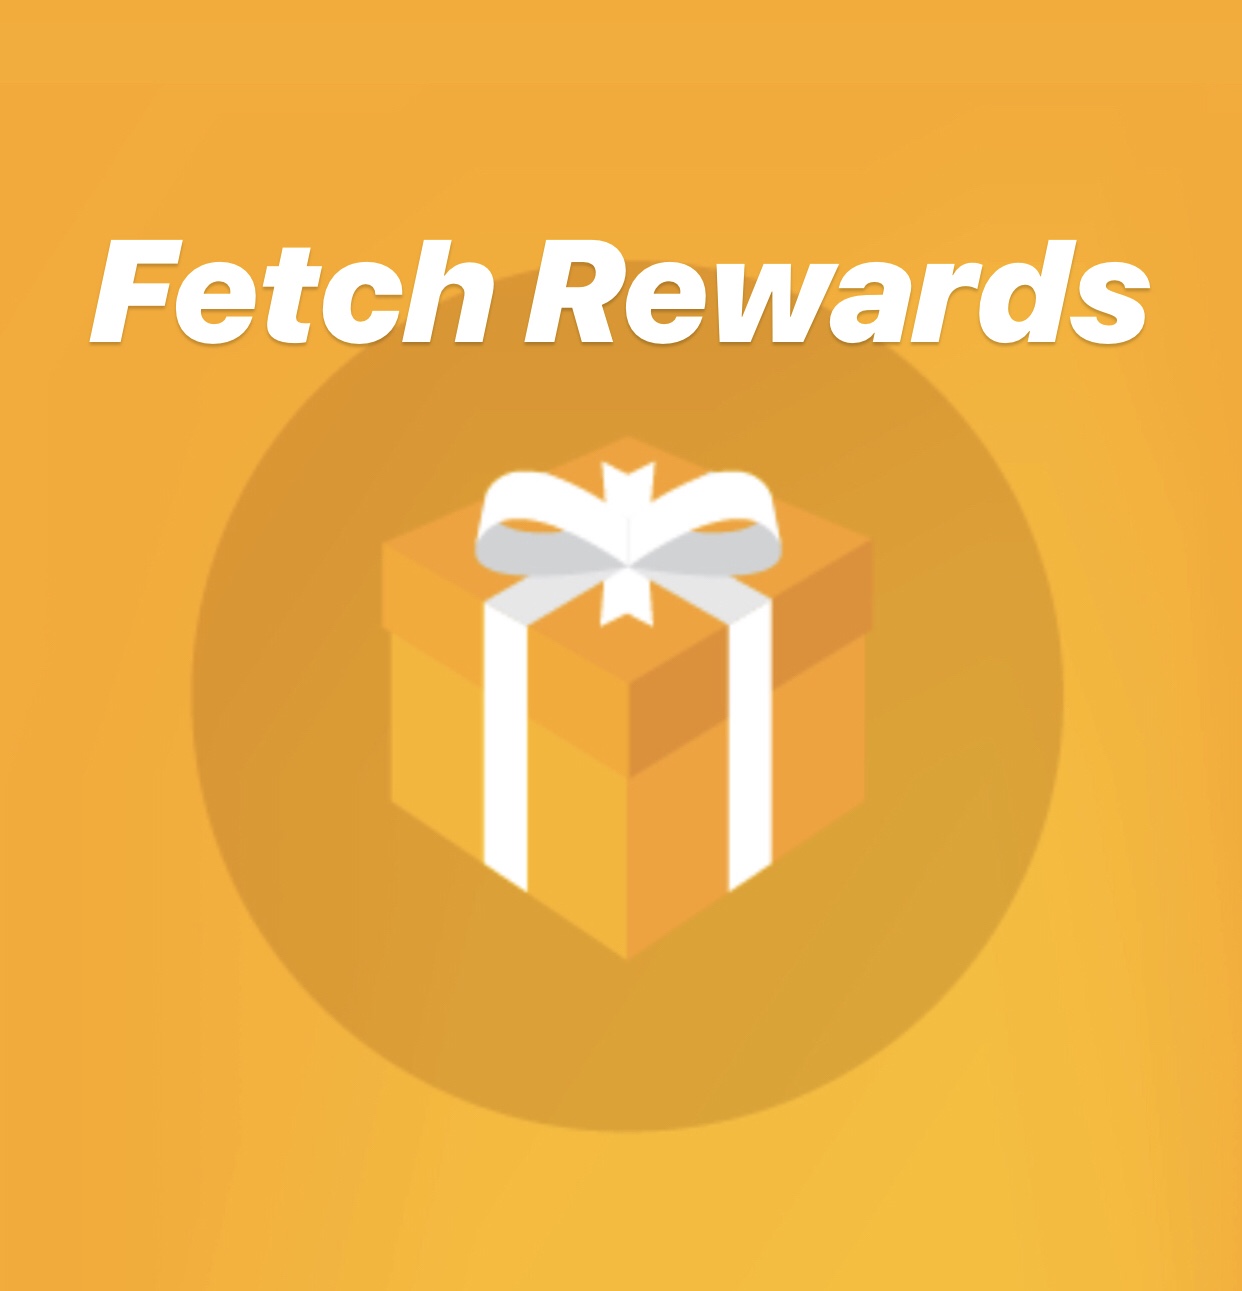 will a clothing receipt work with fetch rewards